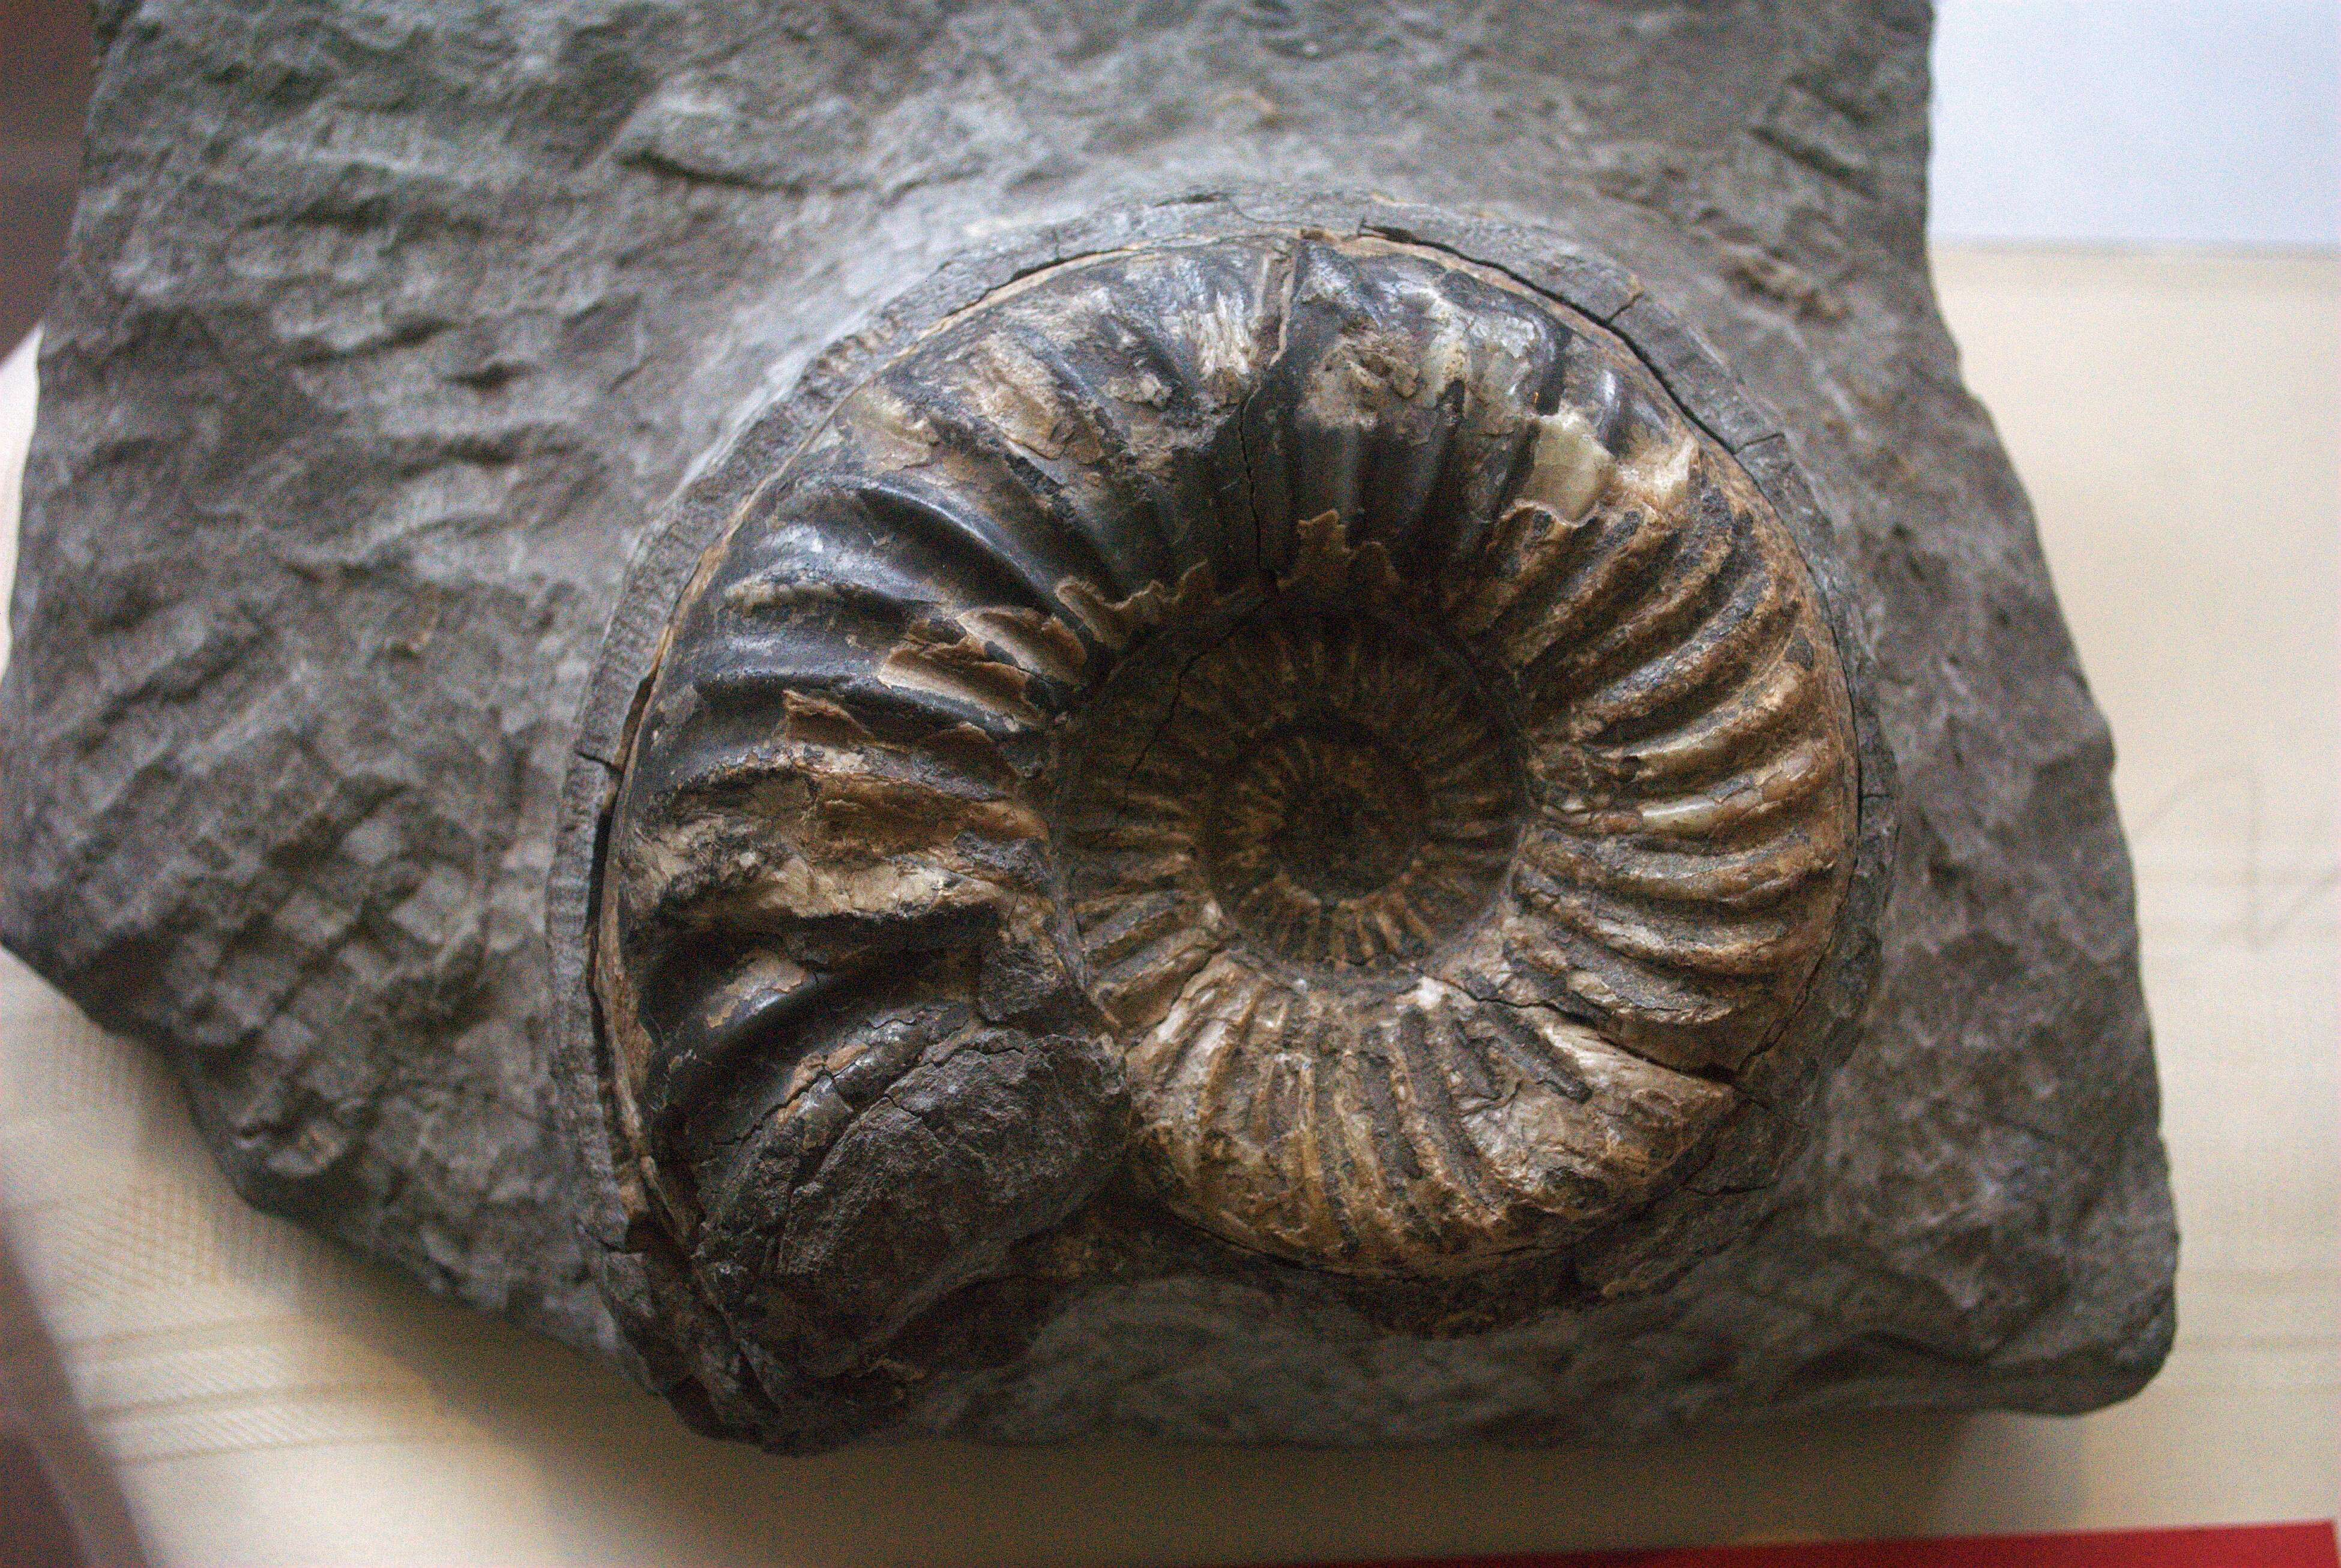 Image of molluscs